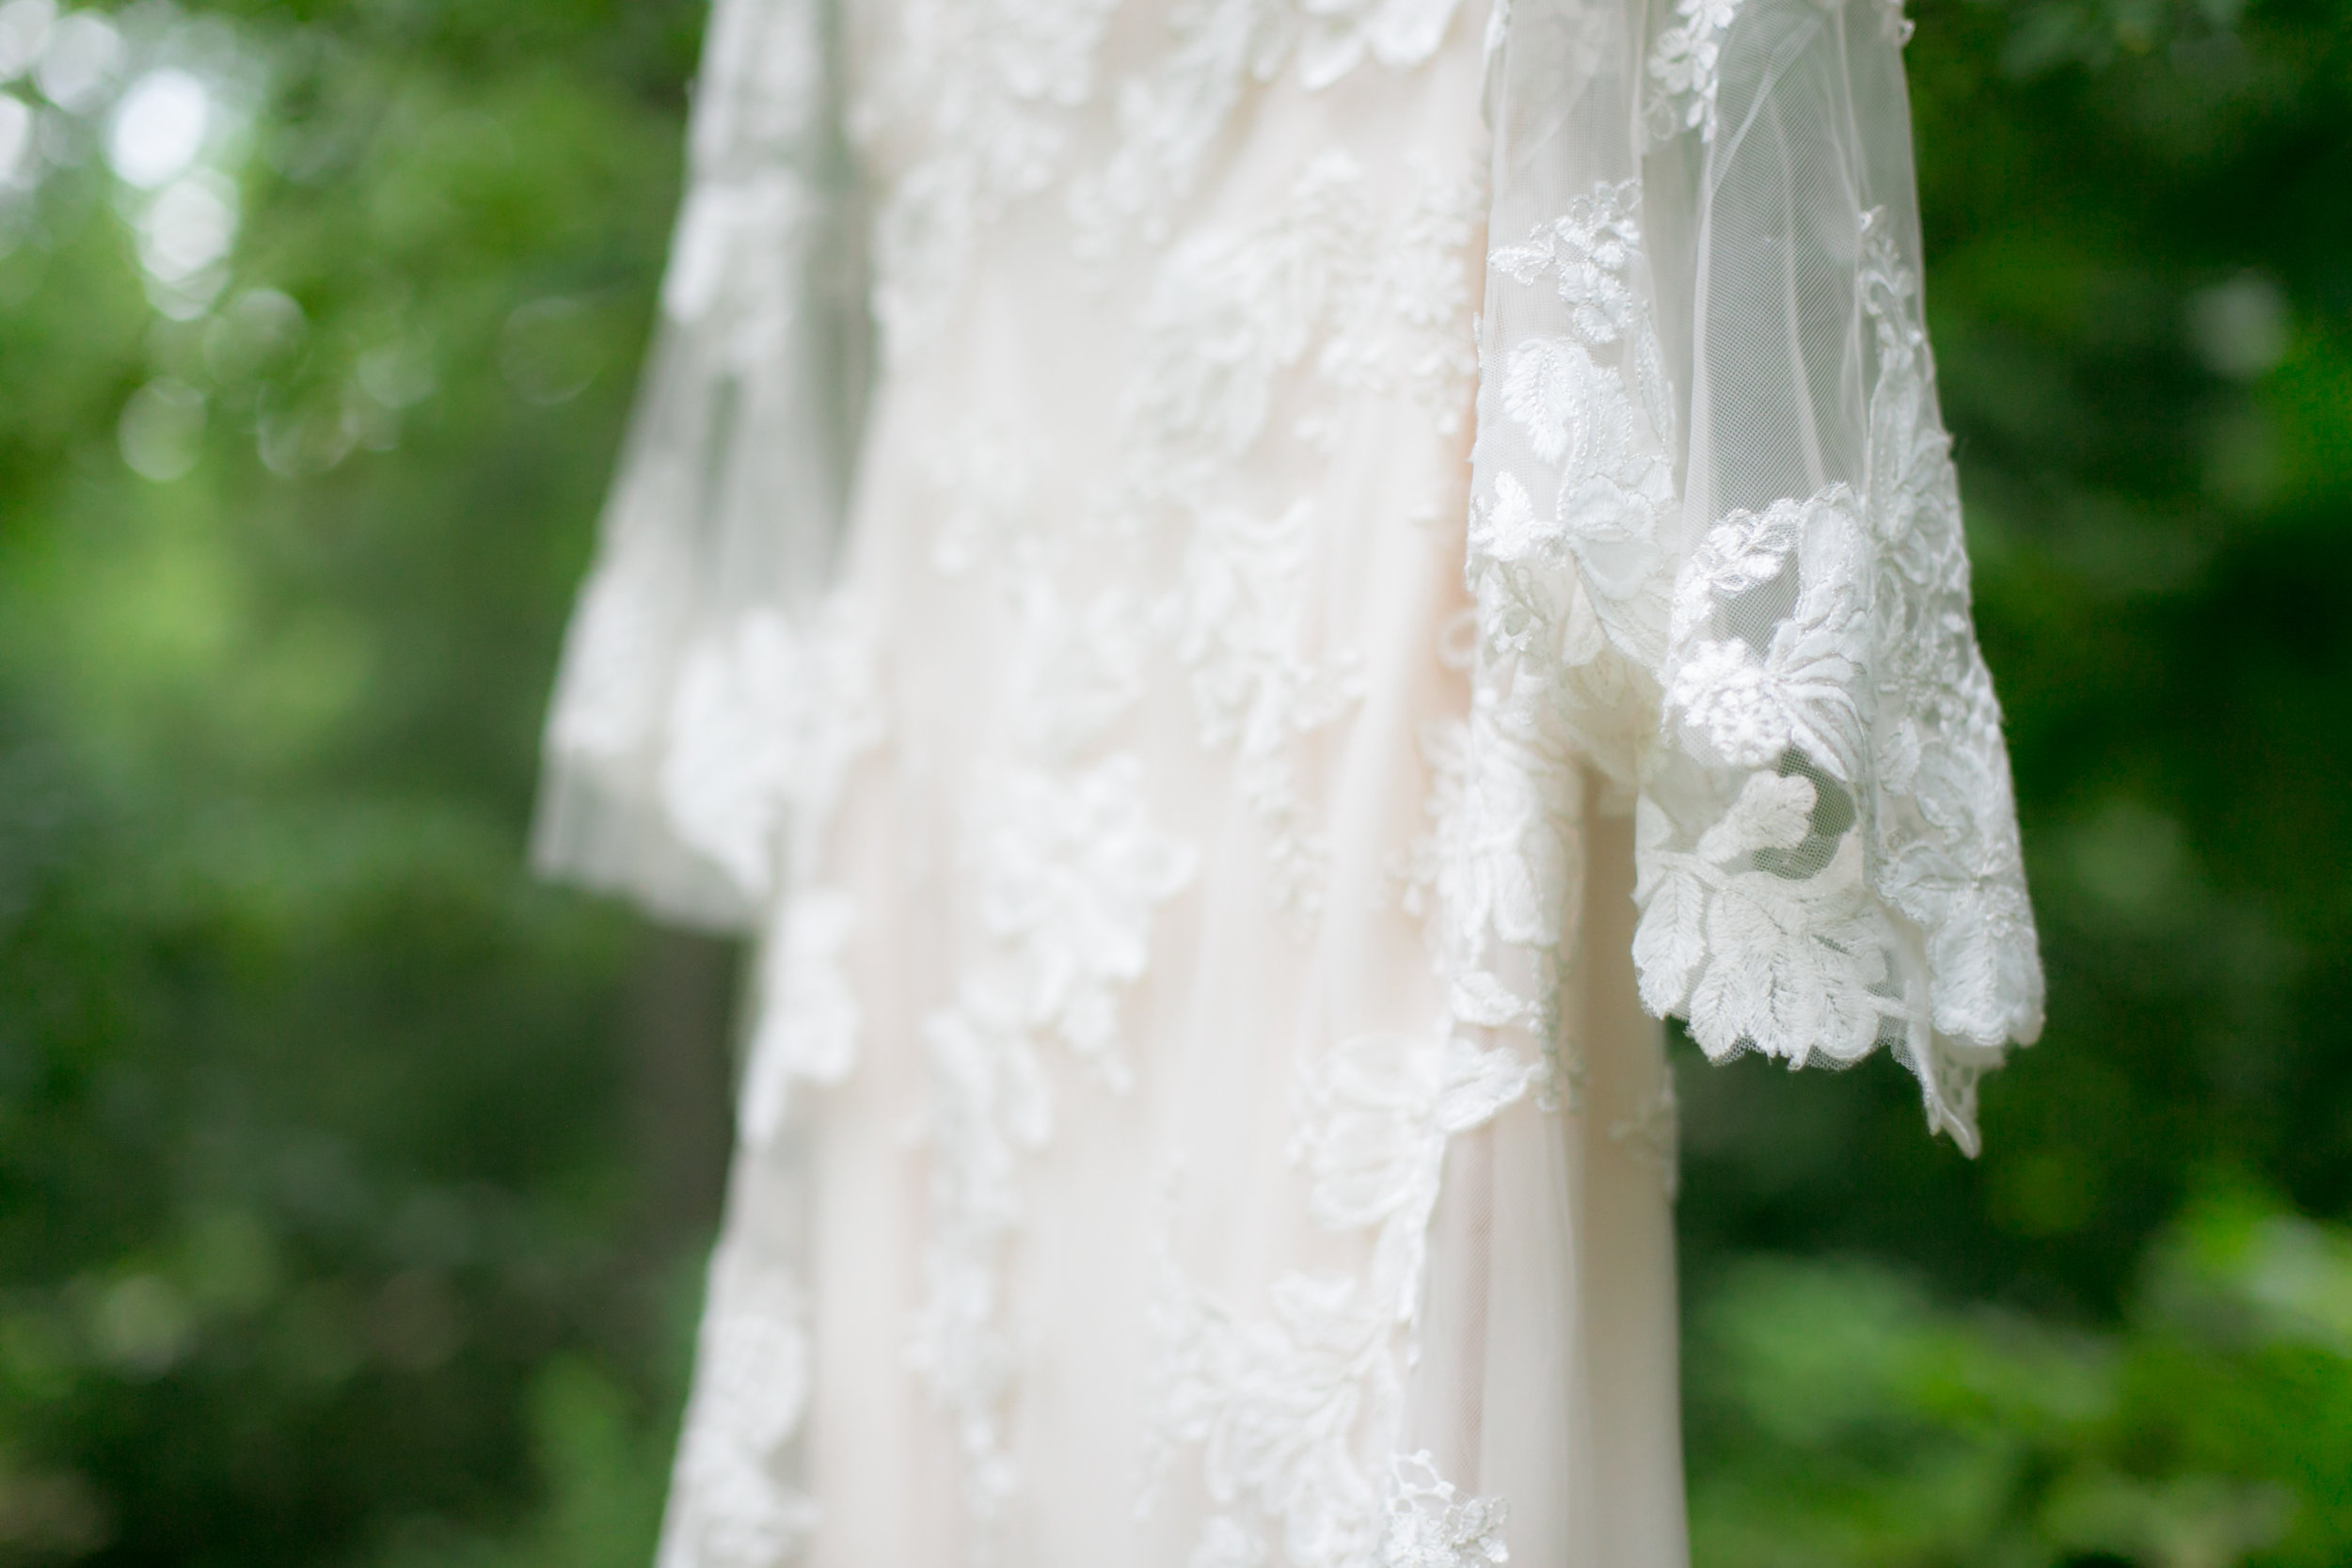 Lace Long Sleeve Boho Wedding Dress - Colchester, Connecticut Wedding Photographer